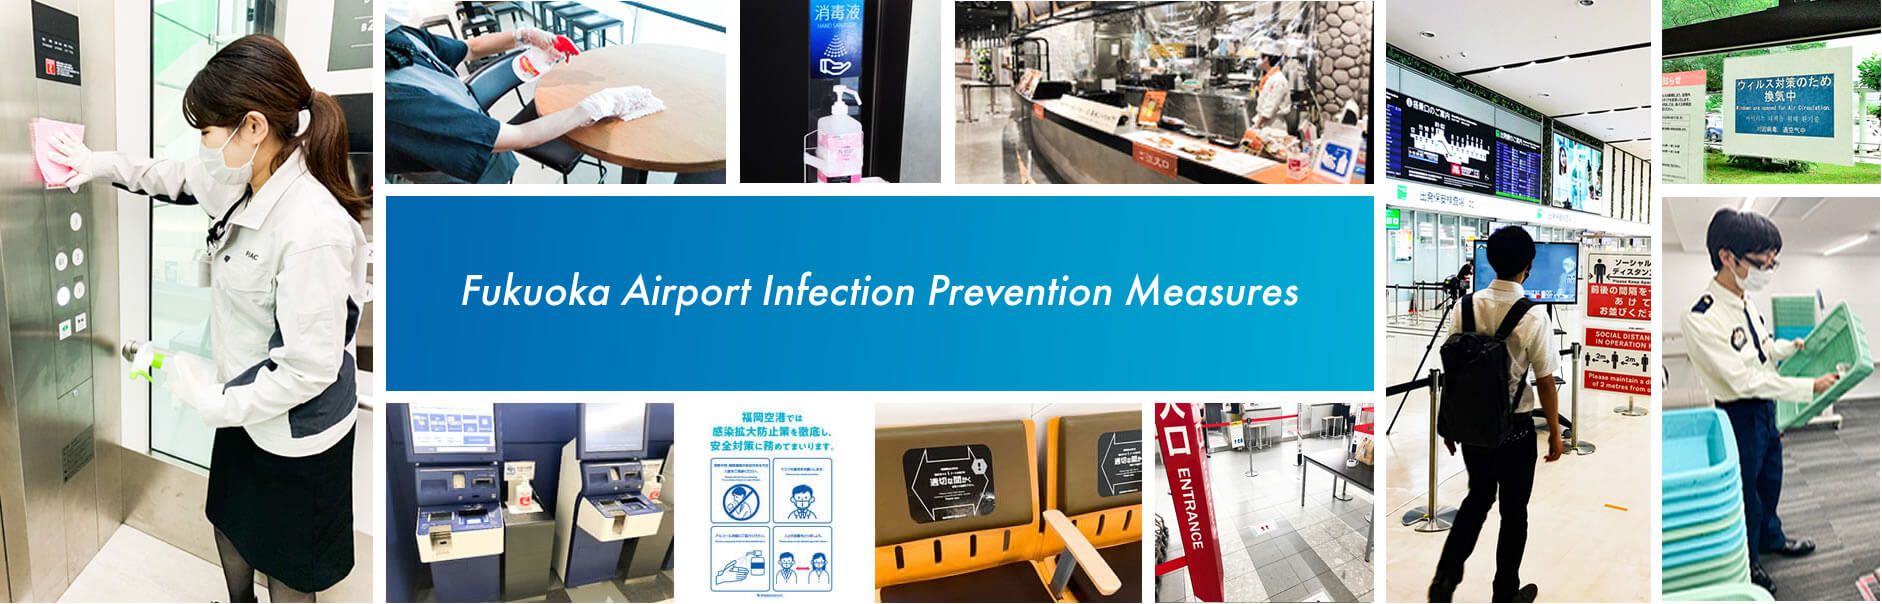 Fukuoka Airport Infection Prevention Measures